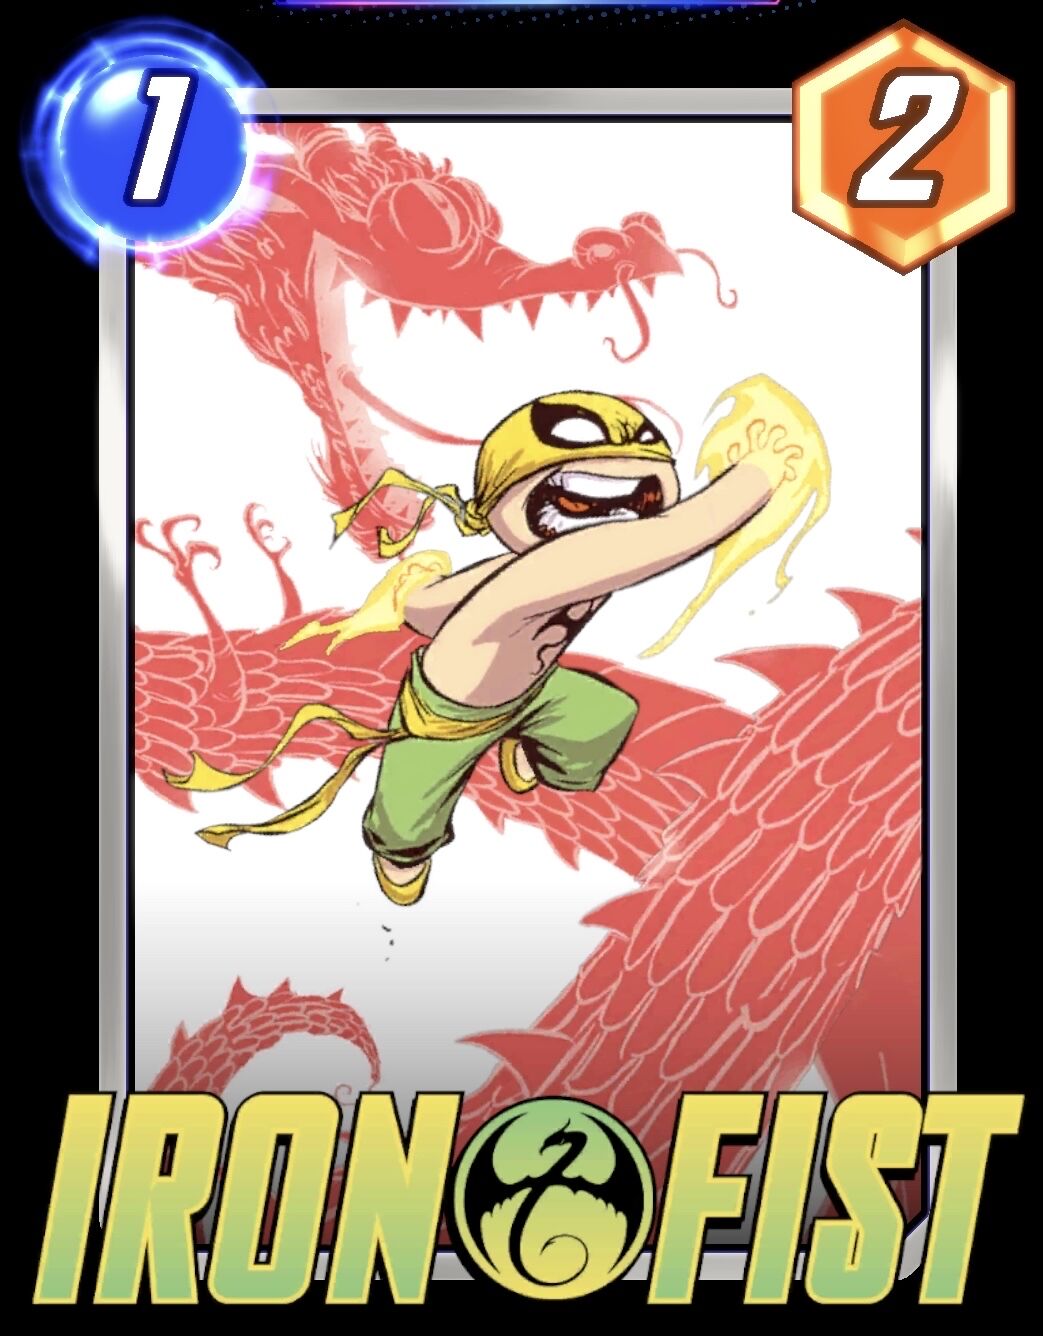 Groot - Marvel Snap Card Database